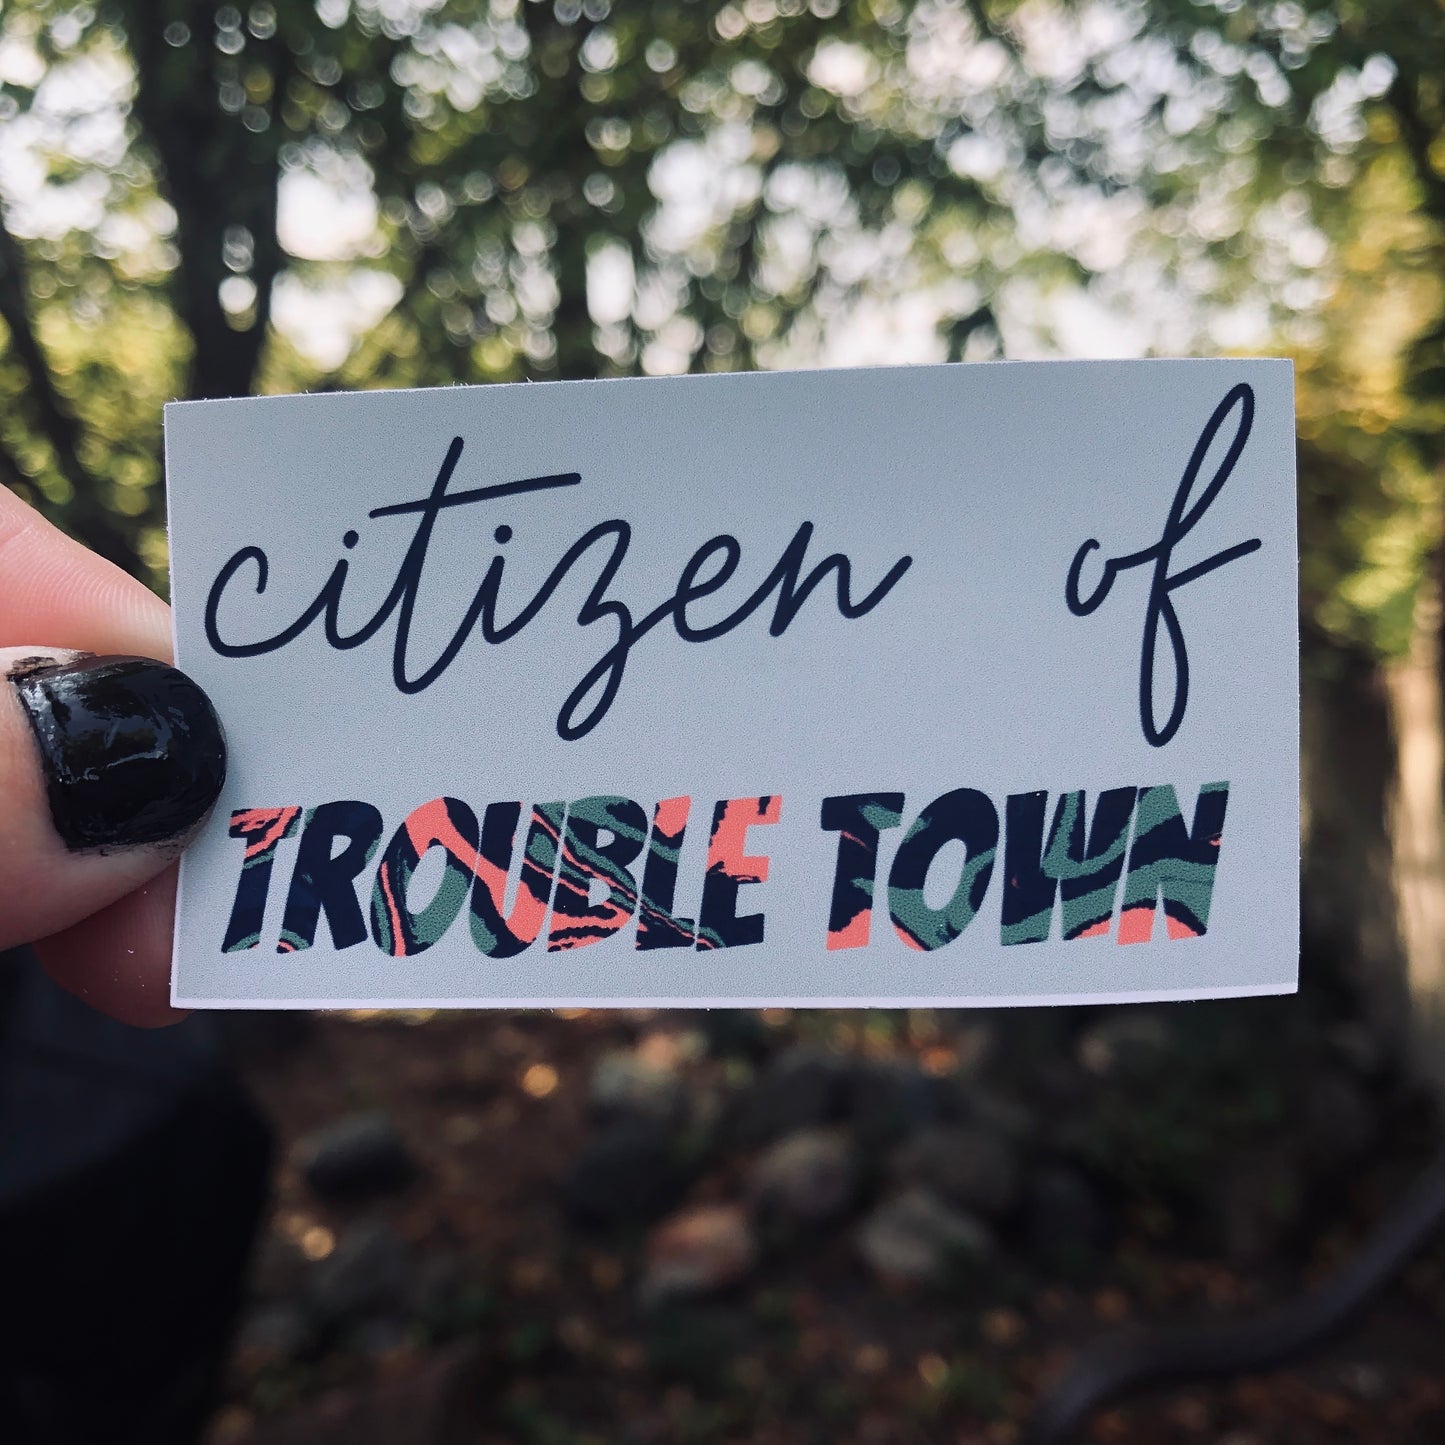 Jordan Davis "Citizen of Trouble Town" Sticker